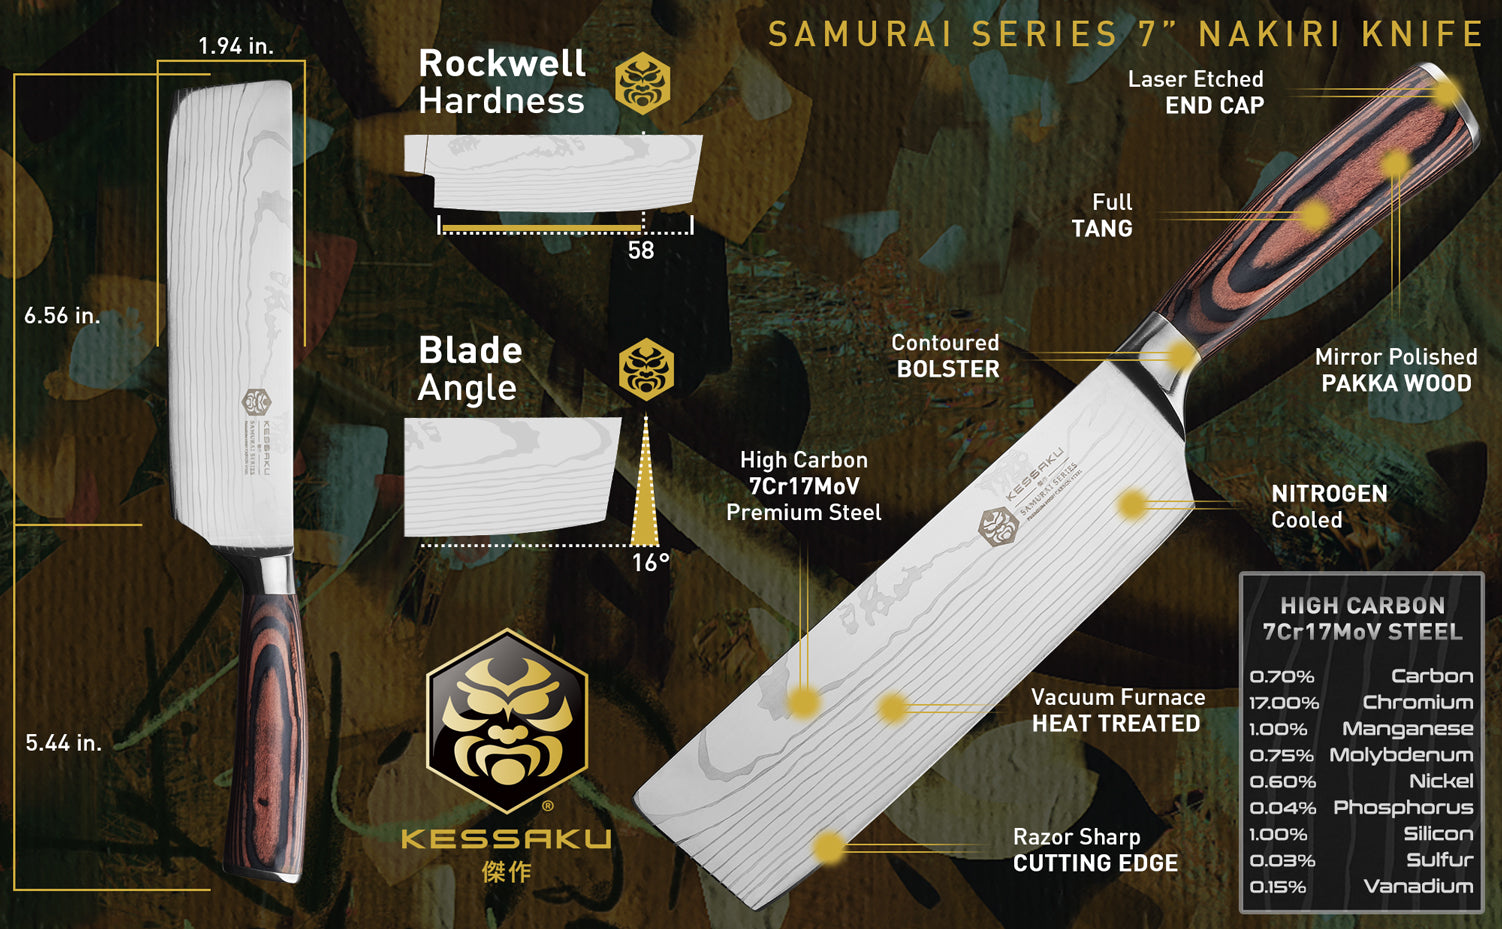 The Kessaku Samurai Series 7-Inch Nakiri Knife's features, dimensions, and steel composition